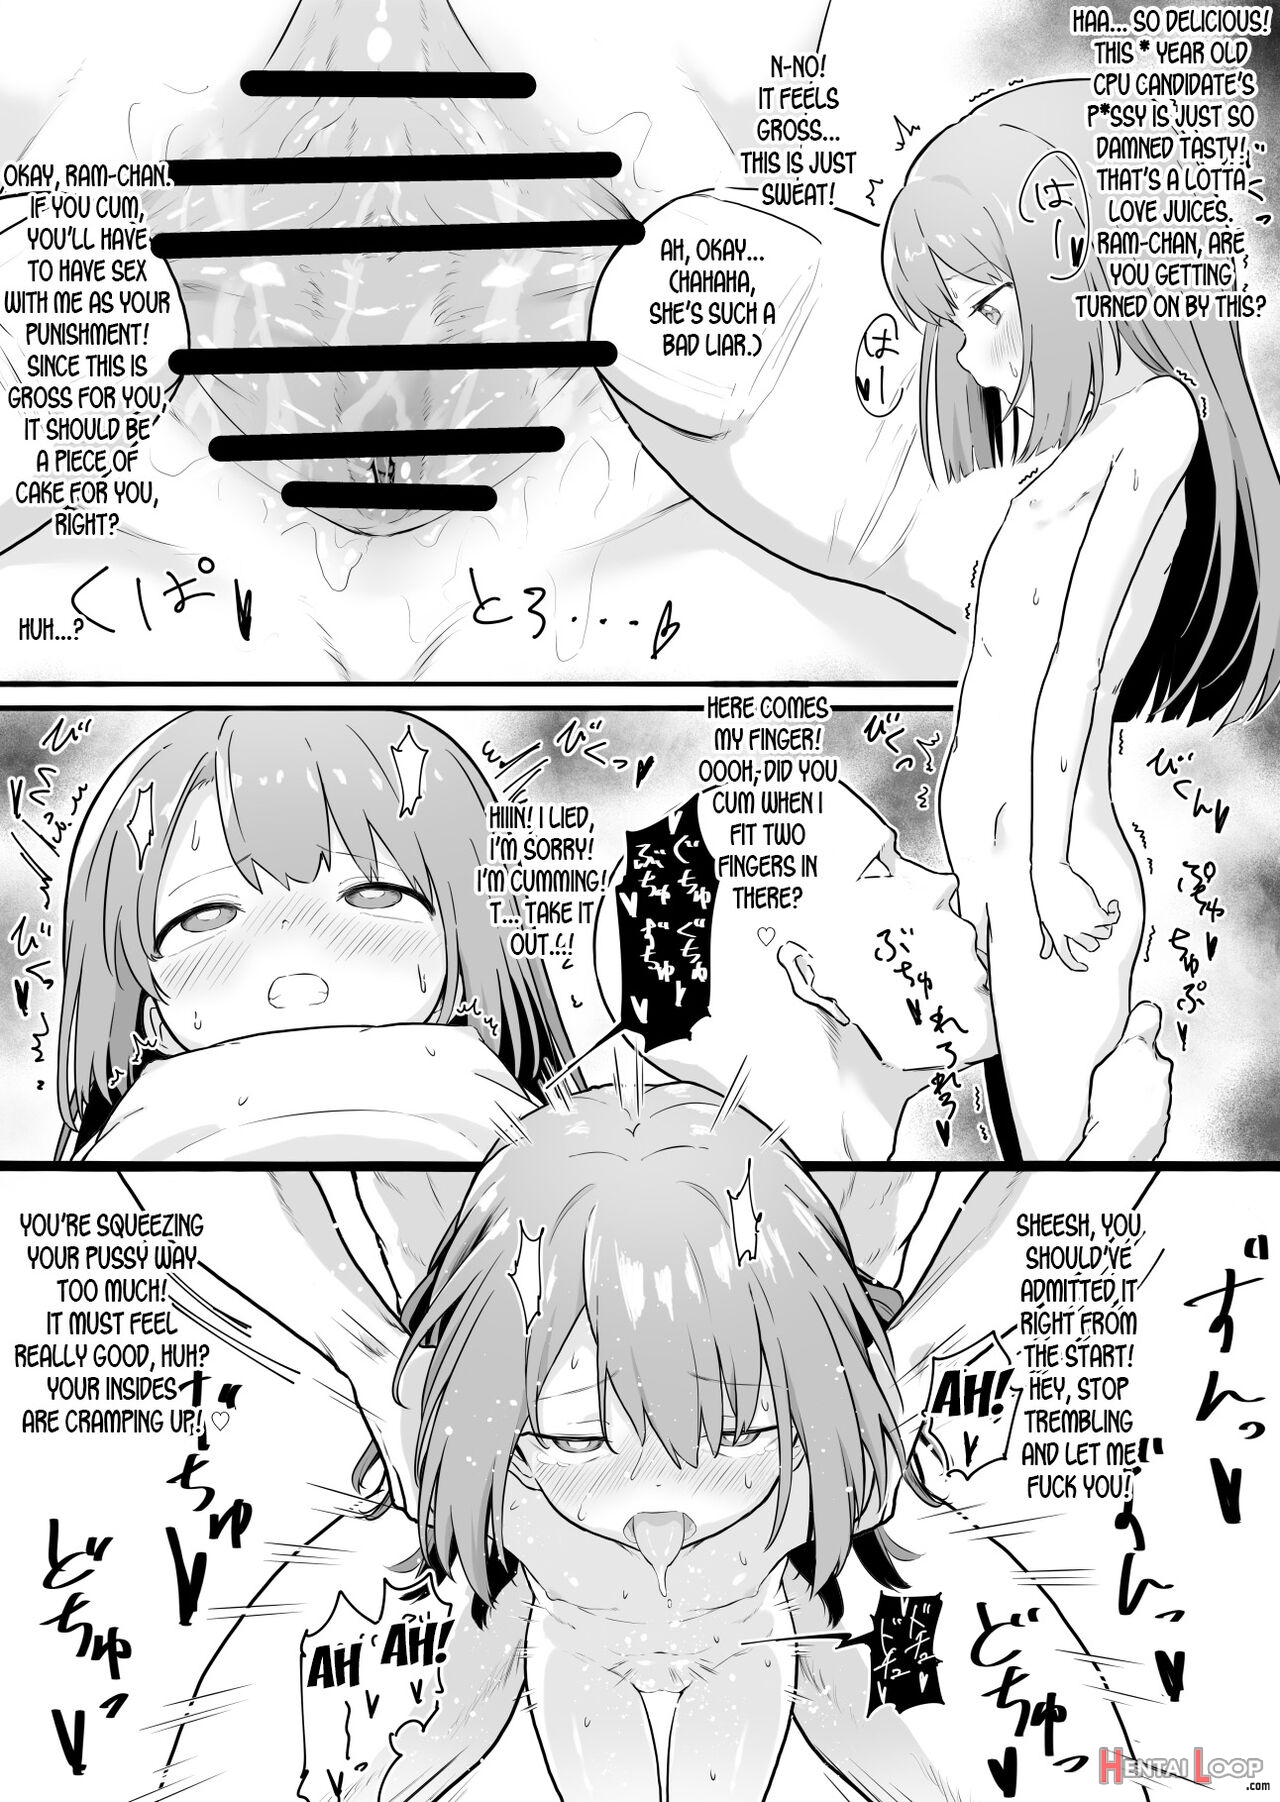 Rom-chan Ram-chan 4p Manga page 2